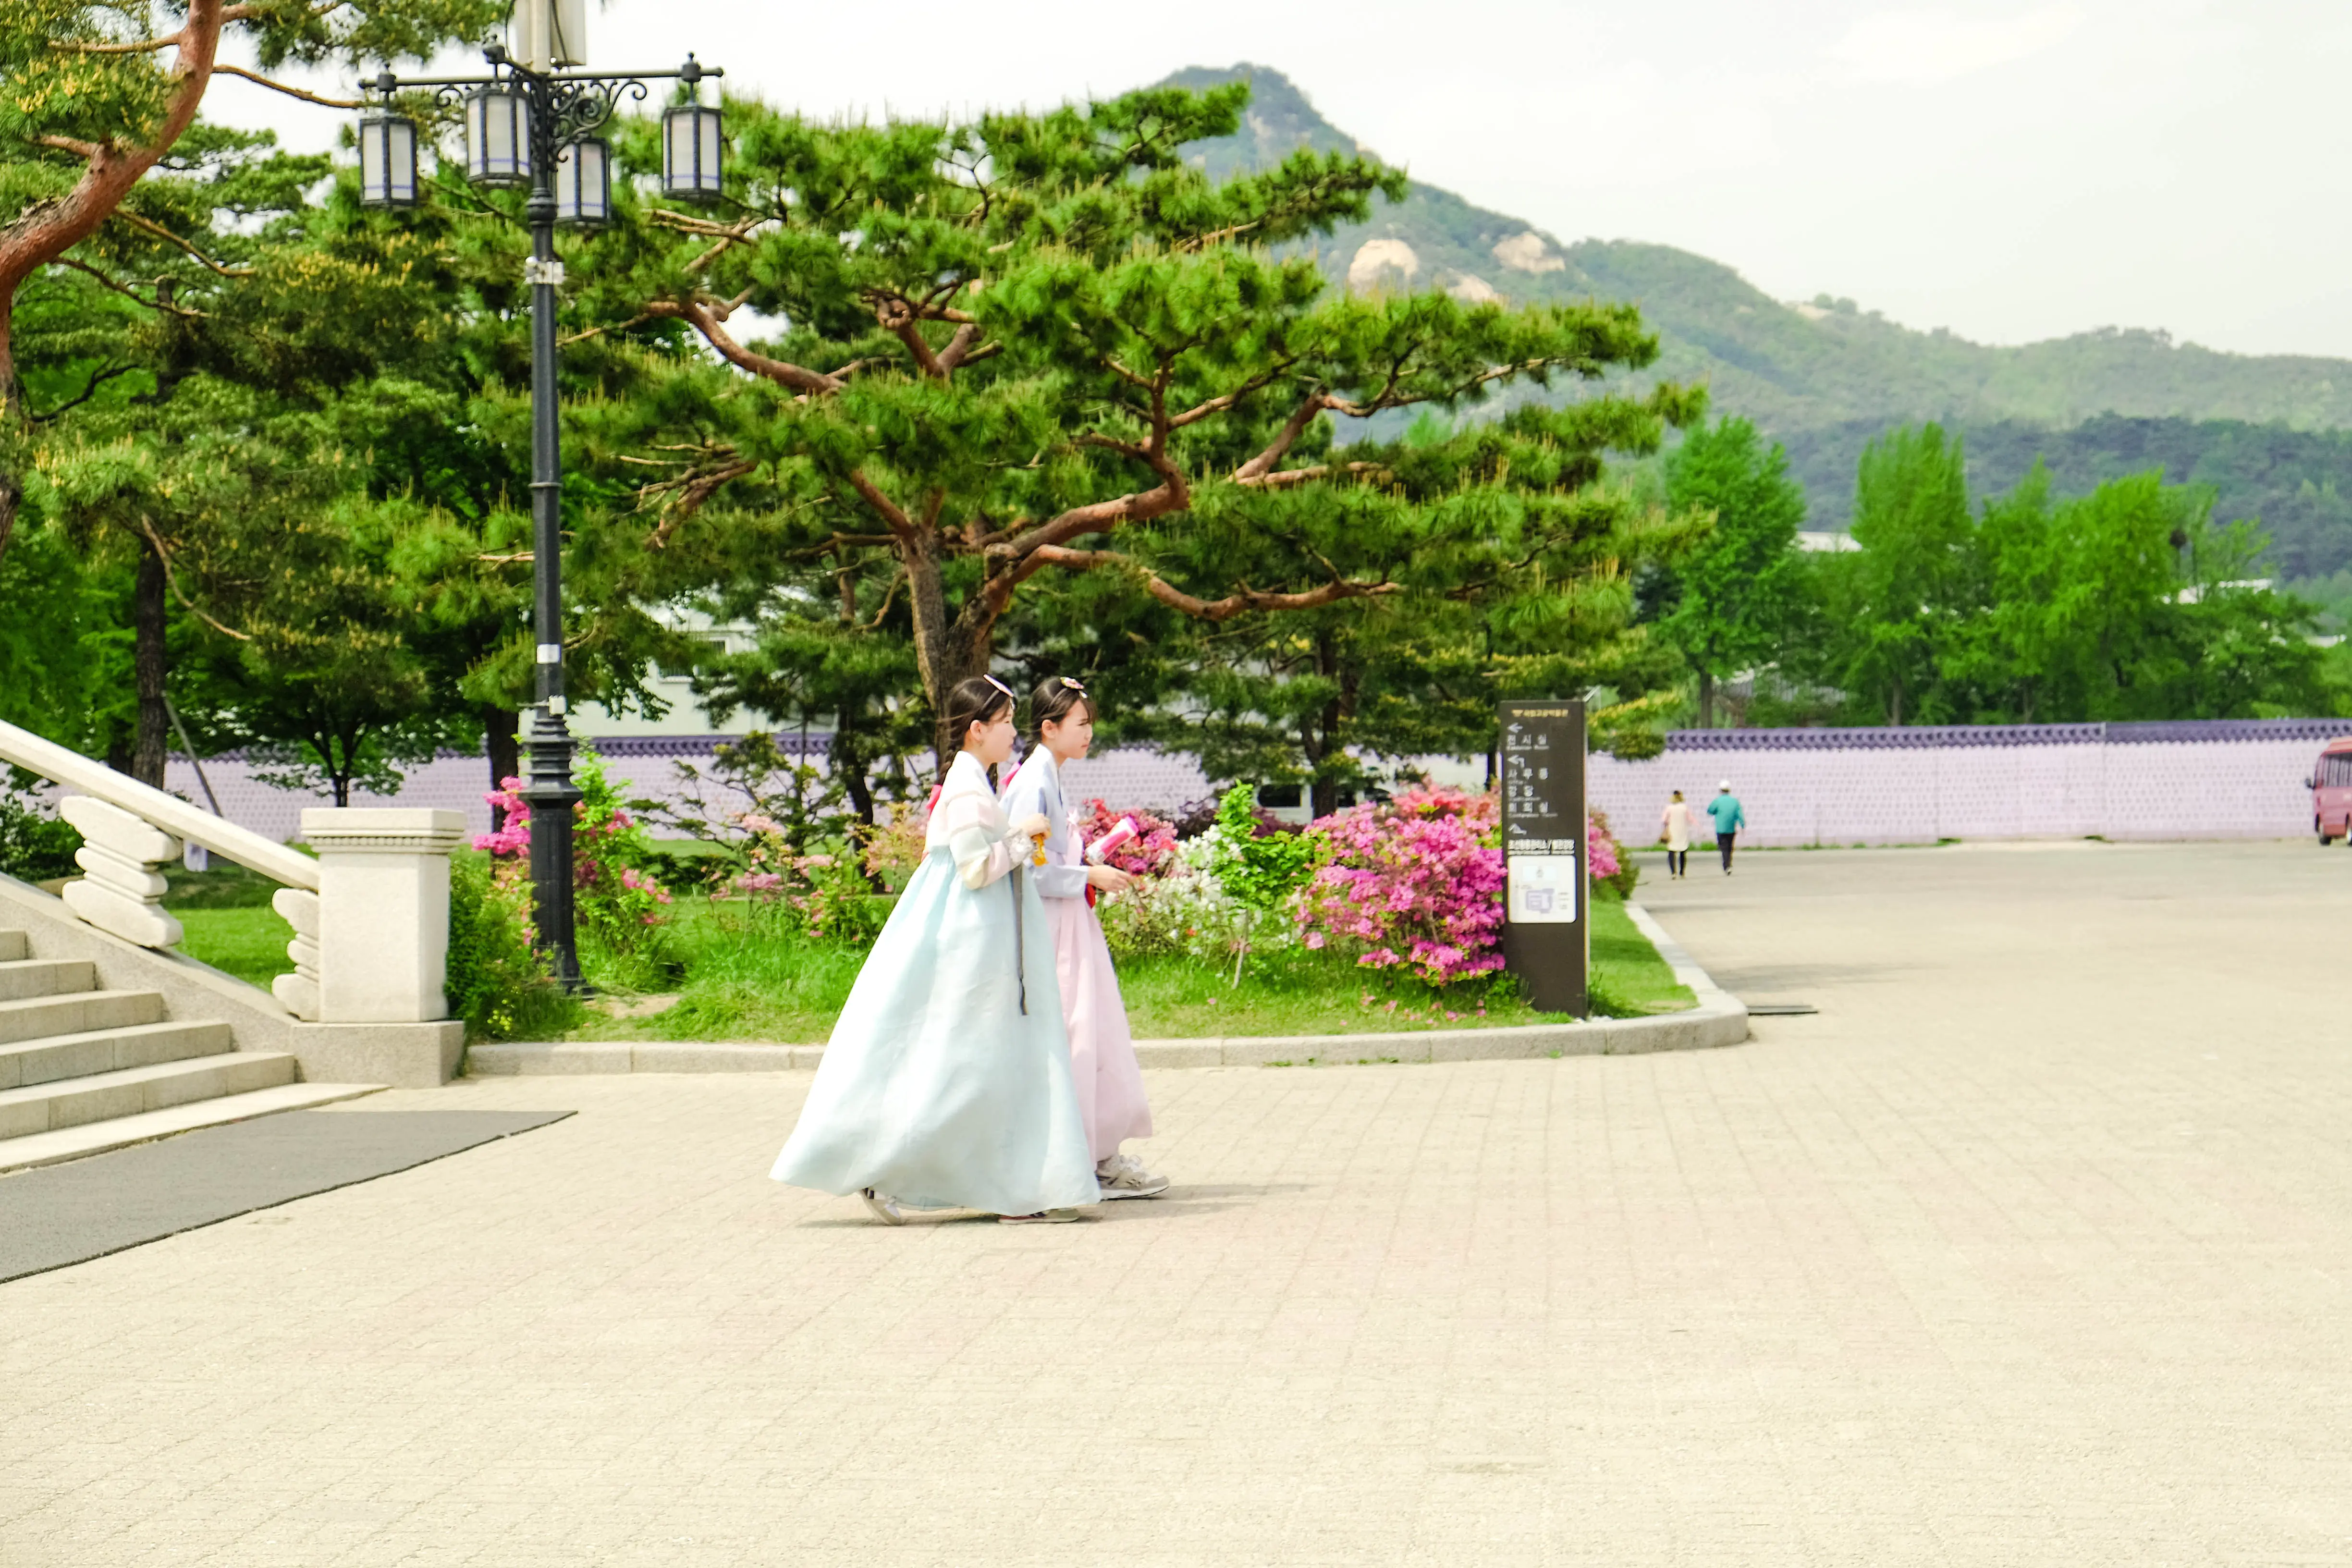 Hanbok in a palace, Seoul, South Korea